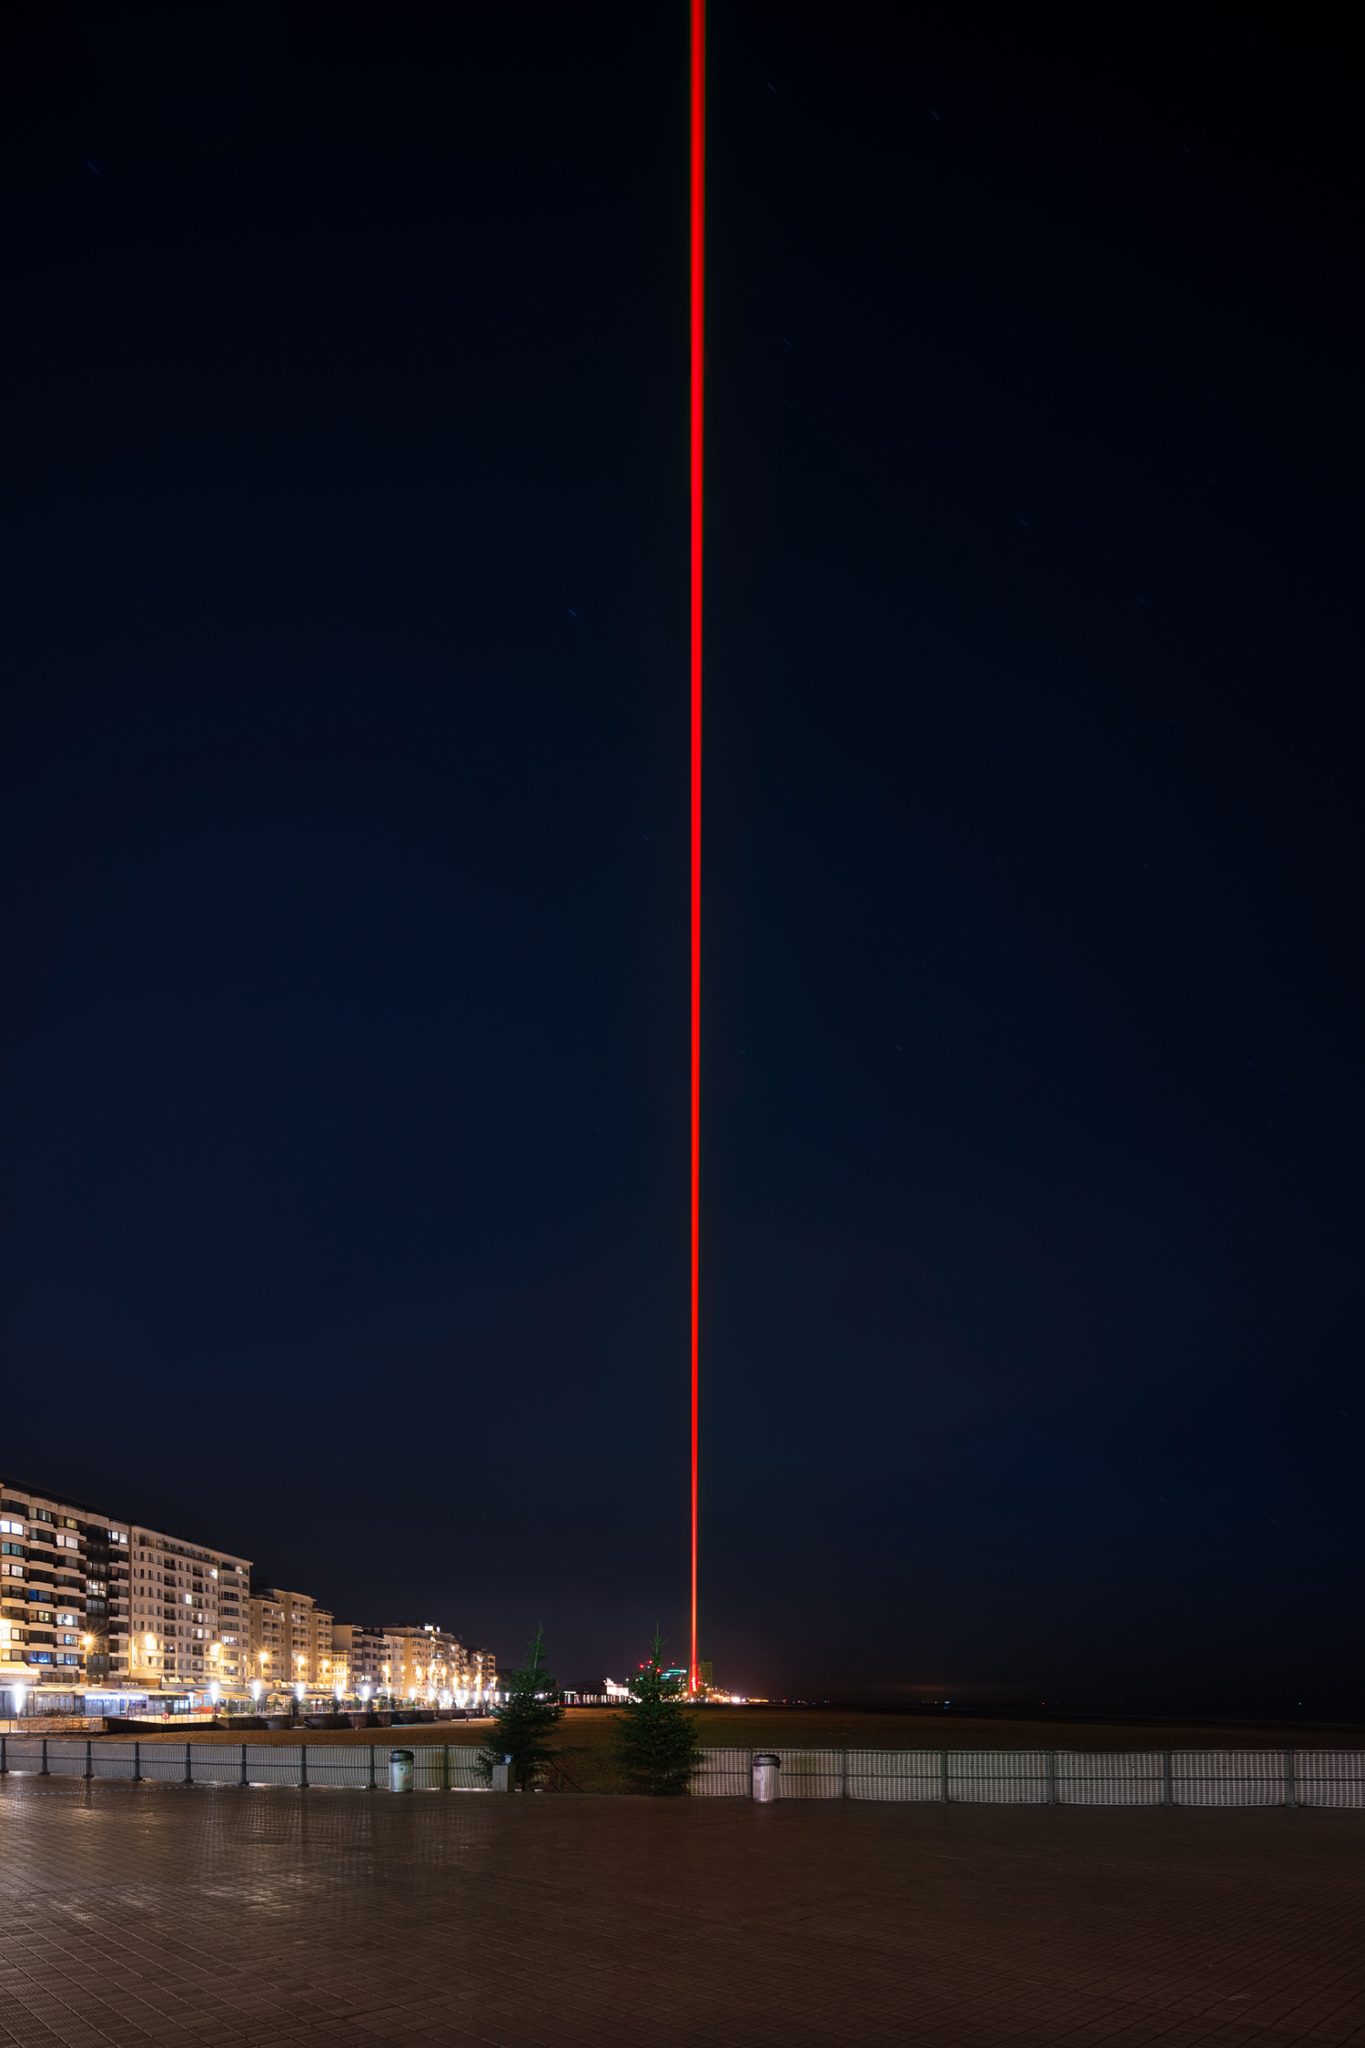 Barrier Laser Light Installation, Ostende, Belgium / SpY